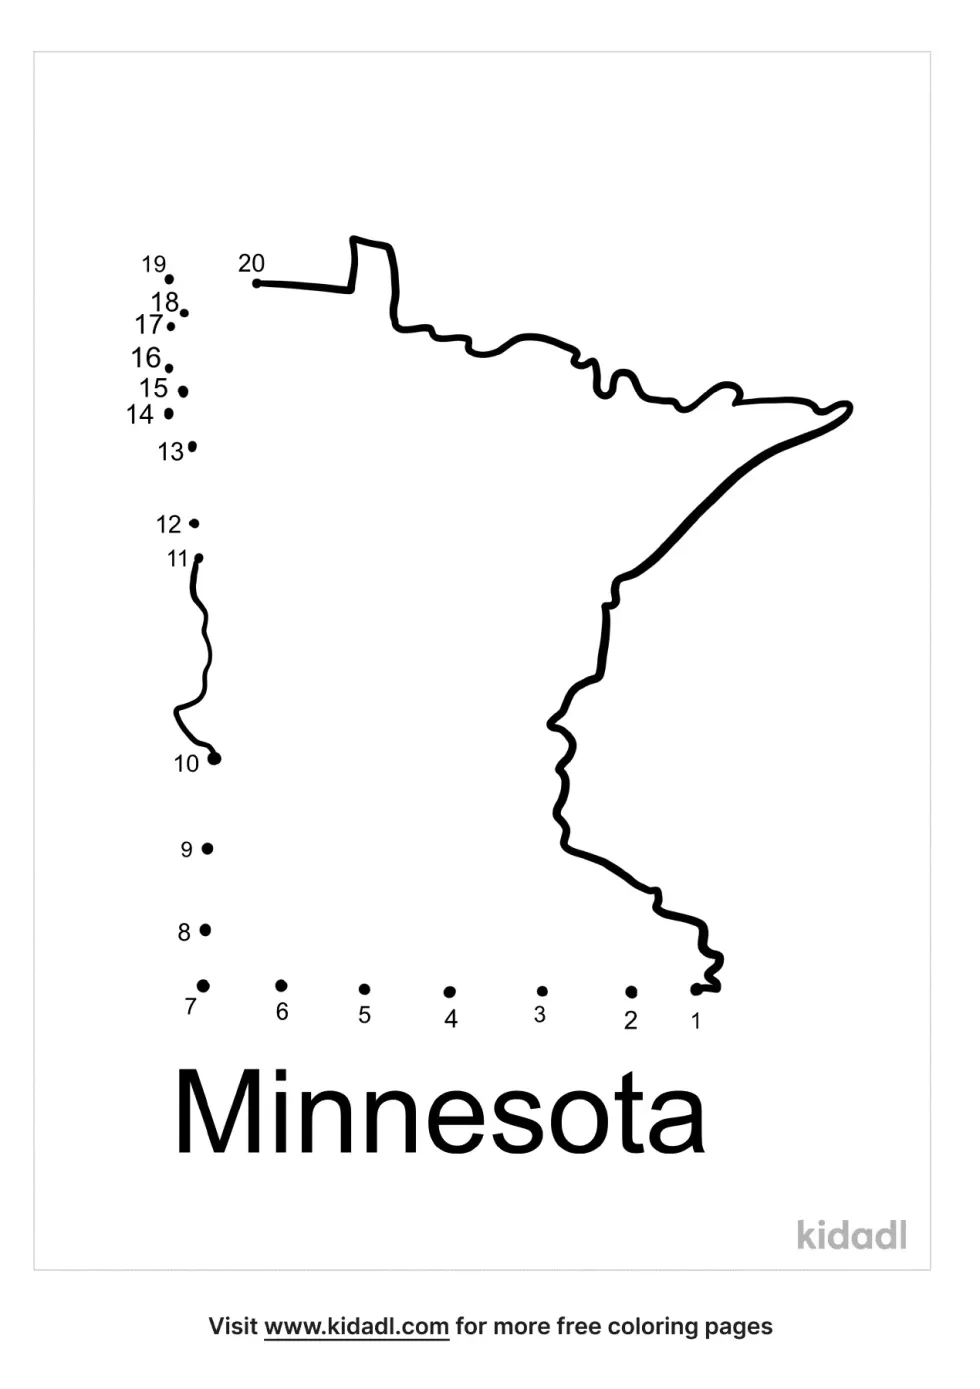 Minnesota Dot To Dot (Easy)